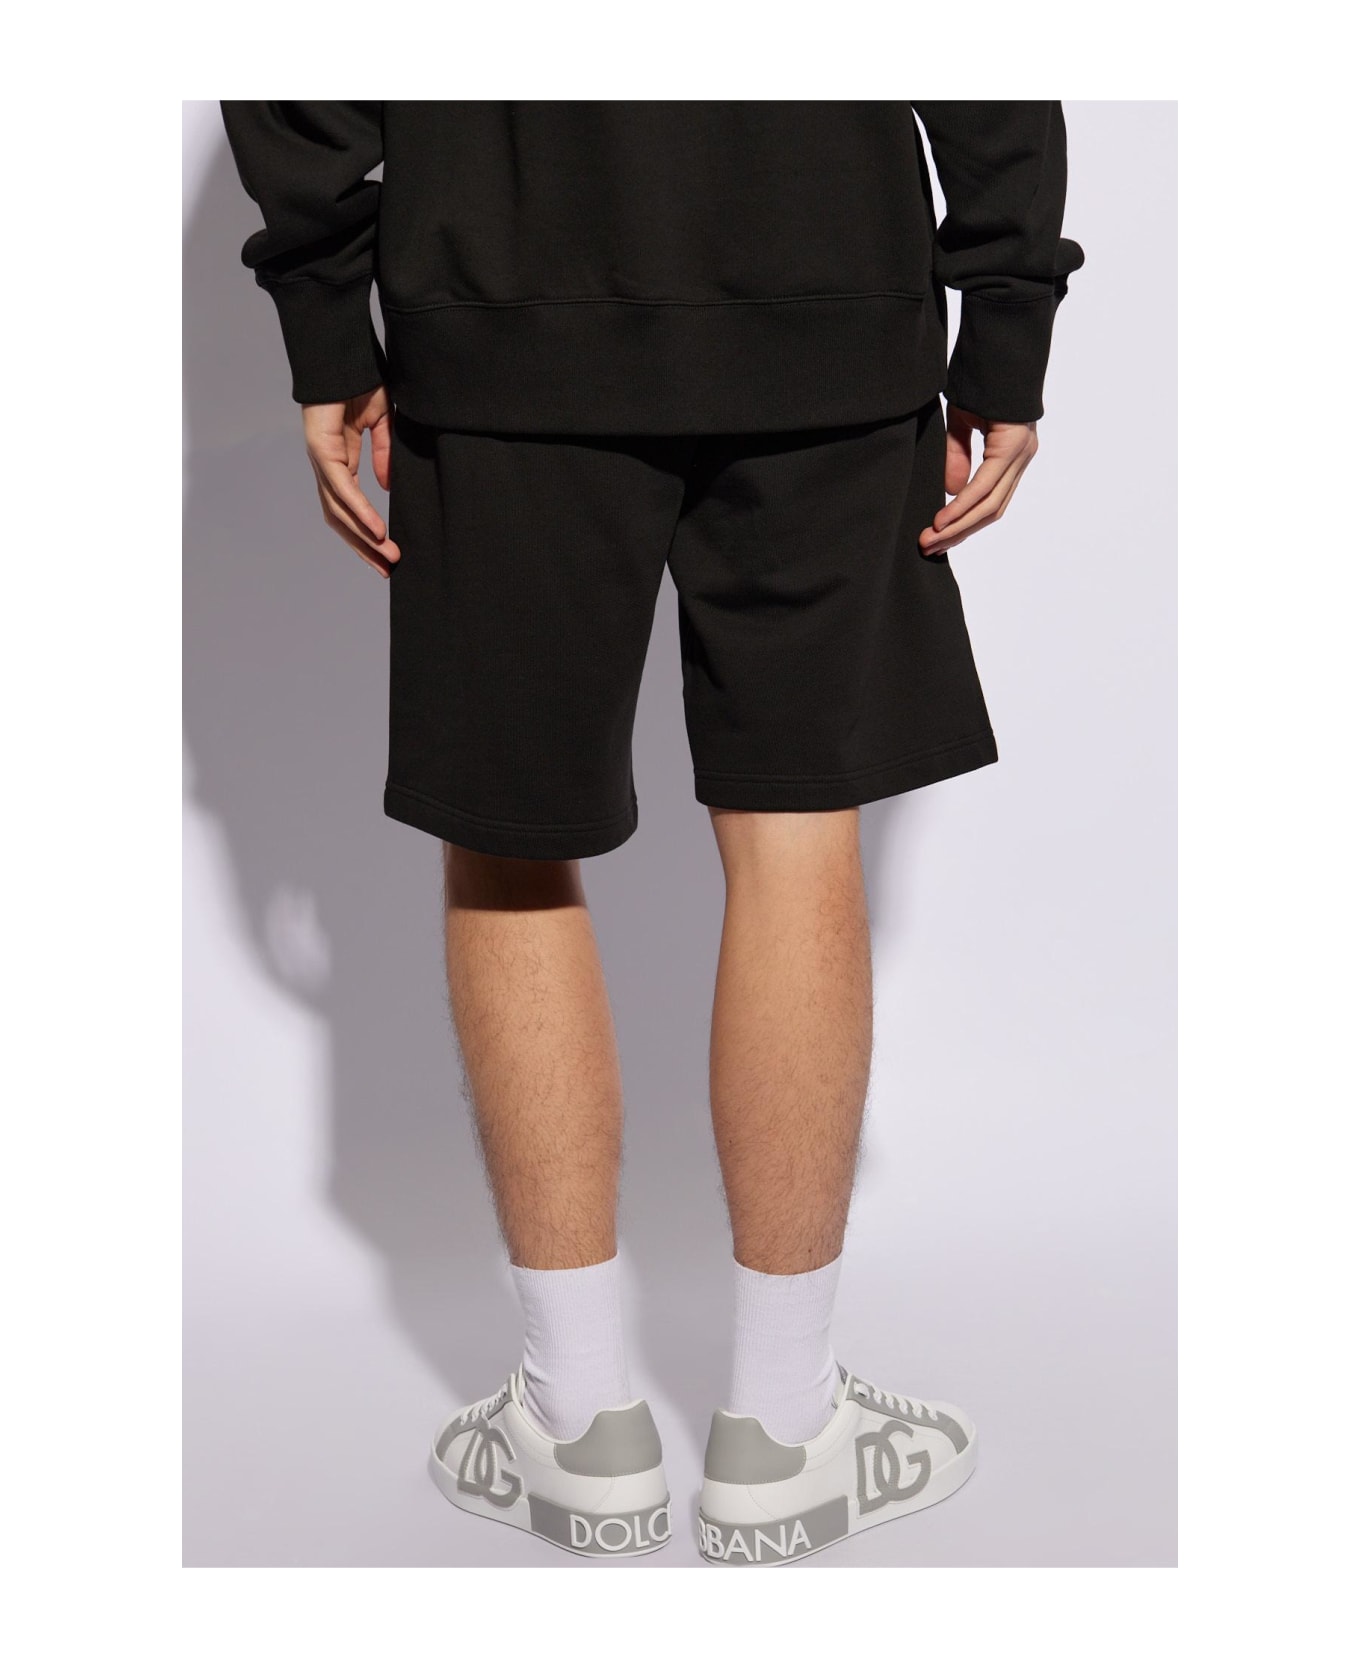 Kenzo Cotton Shorts With Logo - Nero